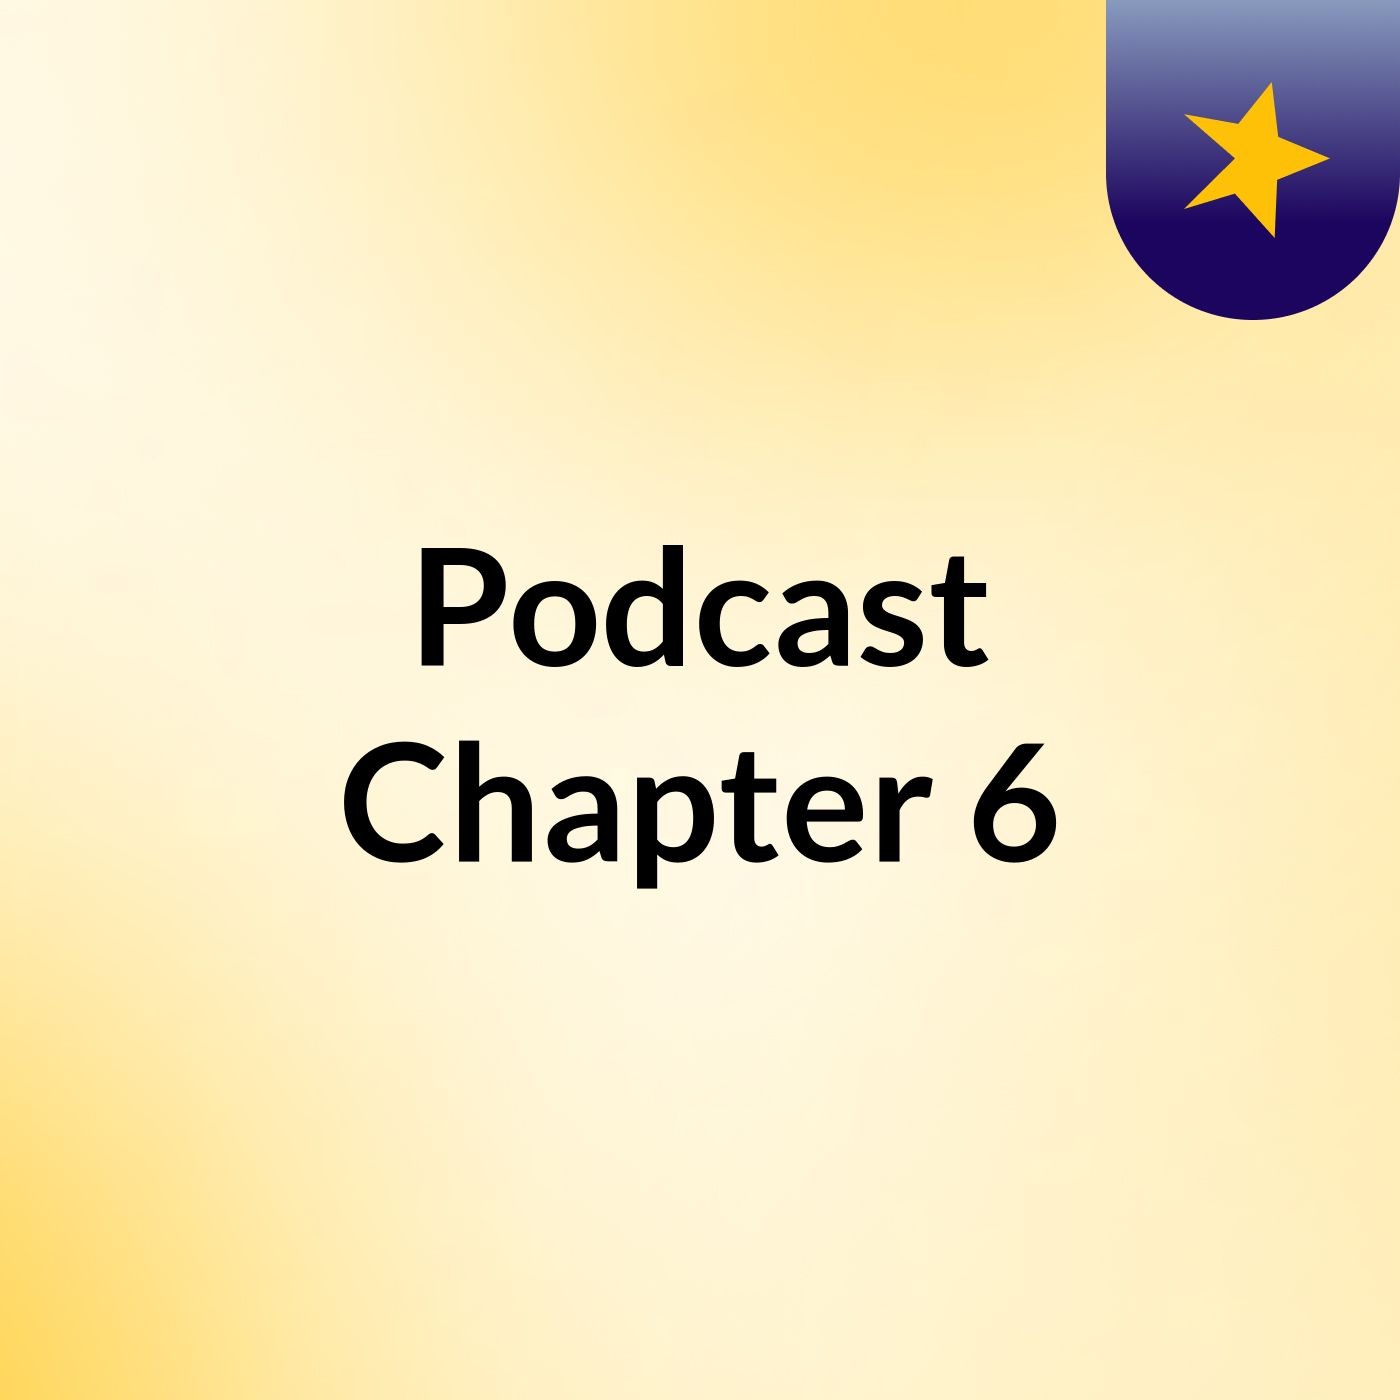 Episodio 3 - Podcast Chapter 6